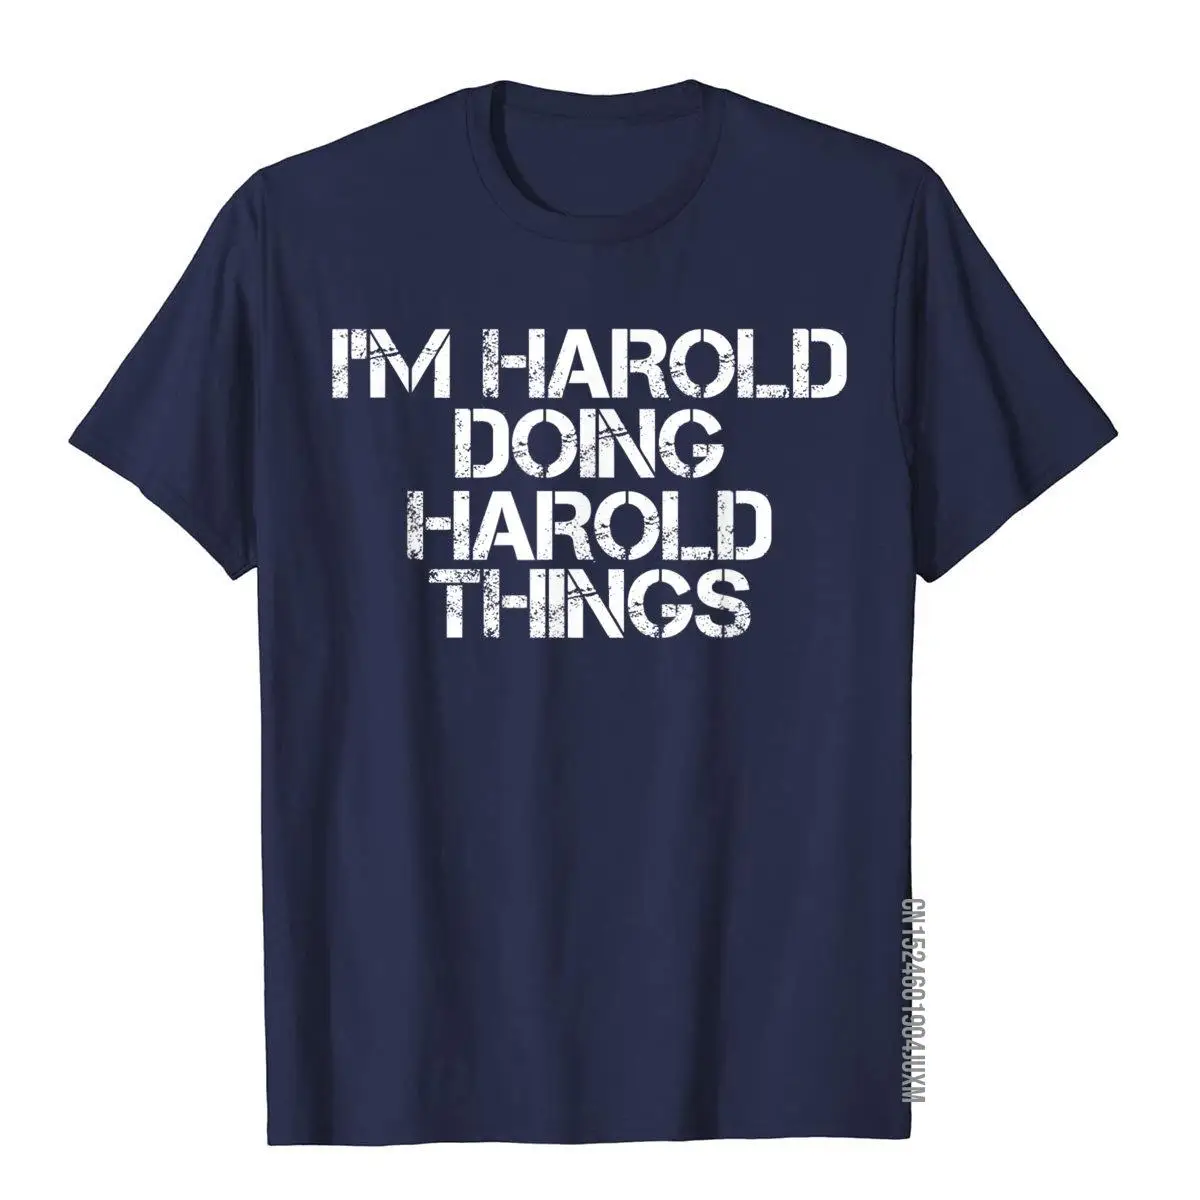 I'M HAROLD DOING HAROLD THINGS Shirt Funny Gift Idea__97A2376navy